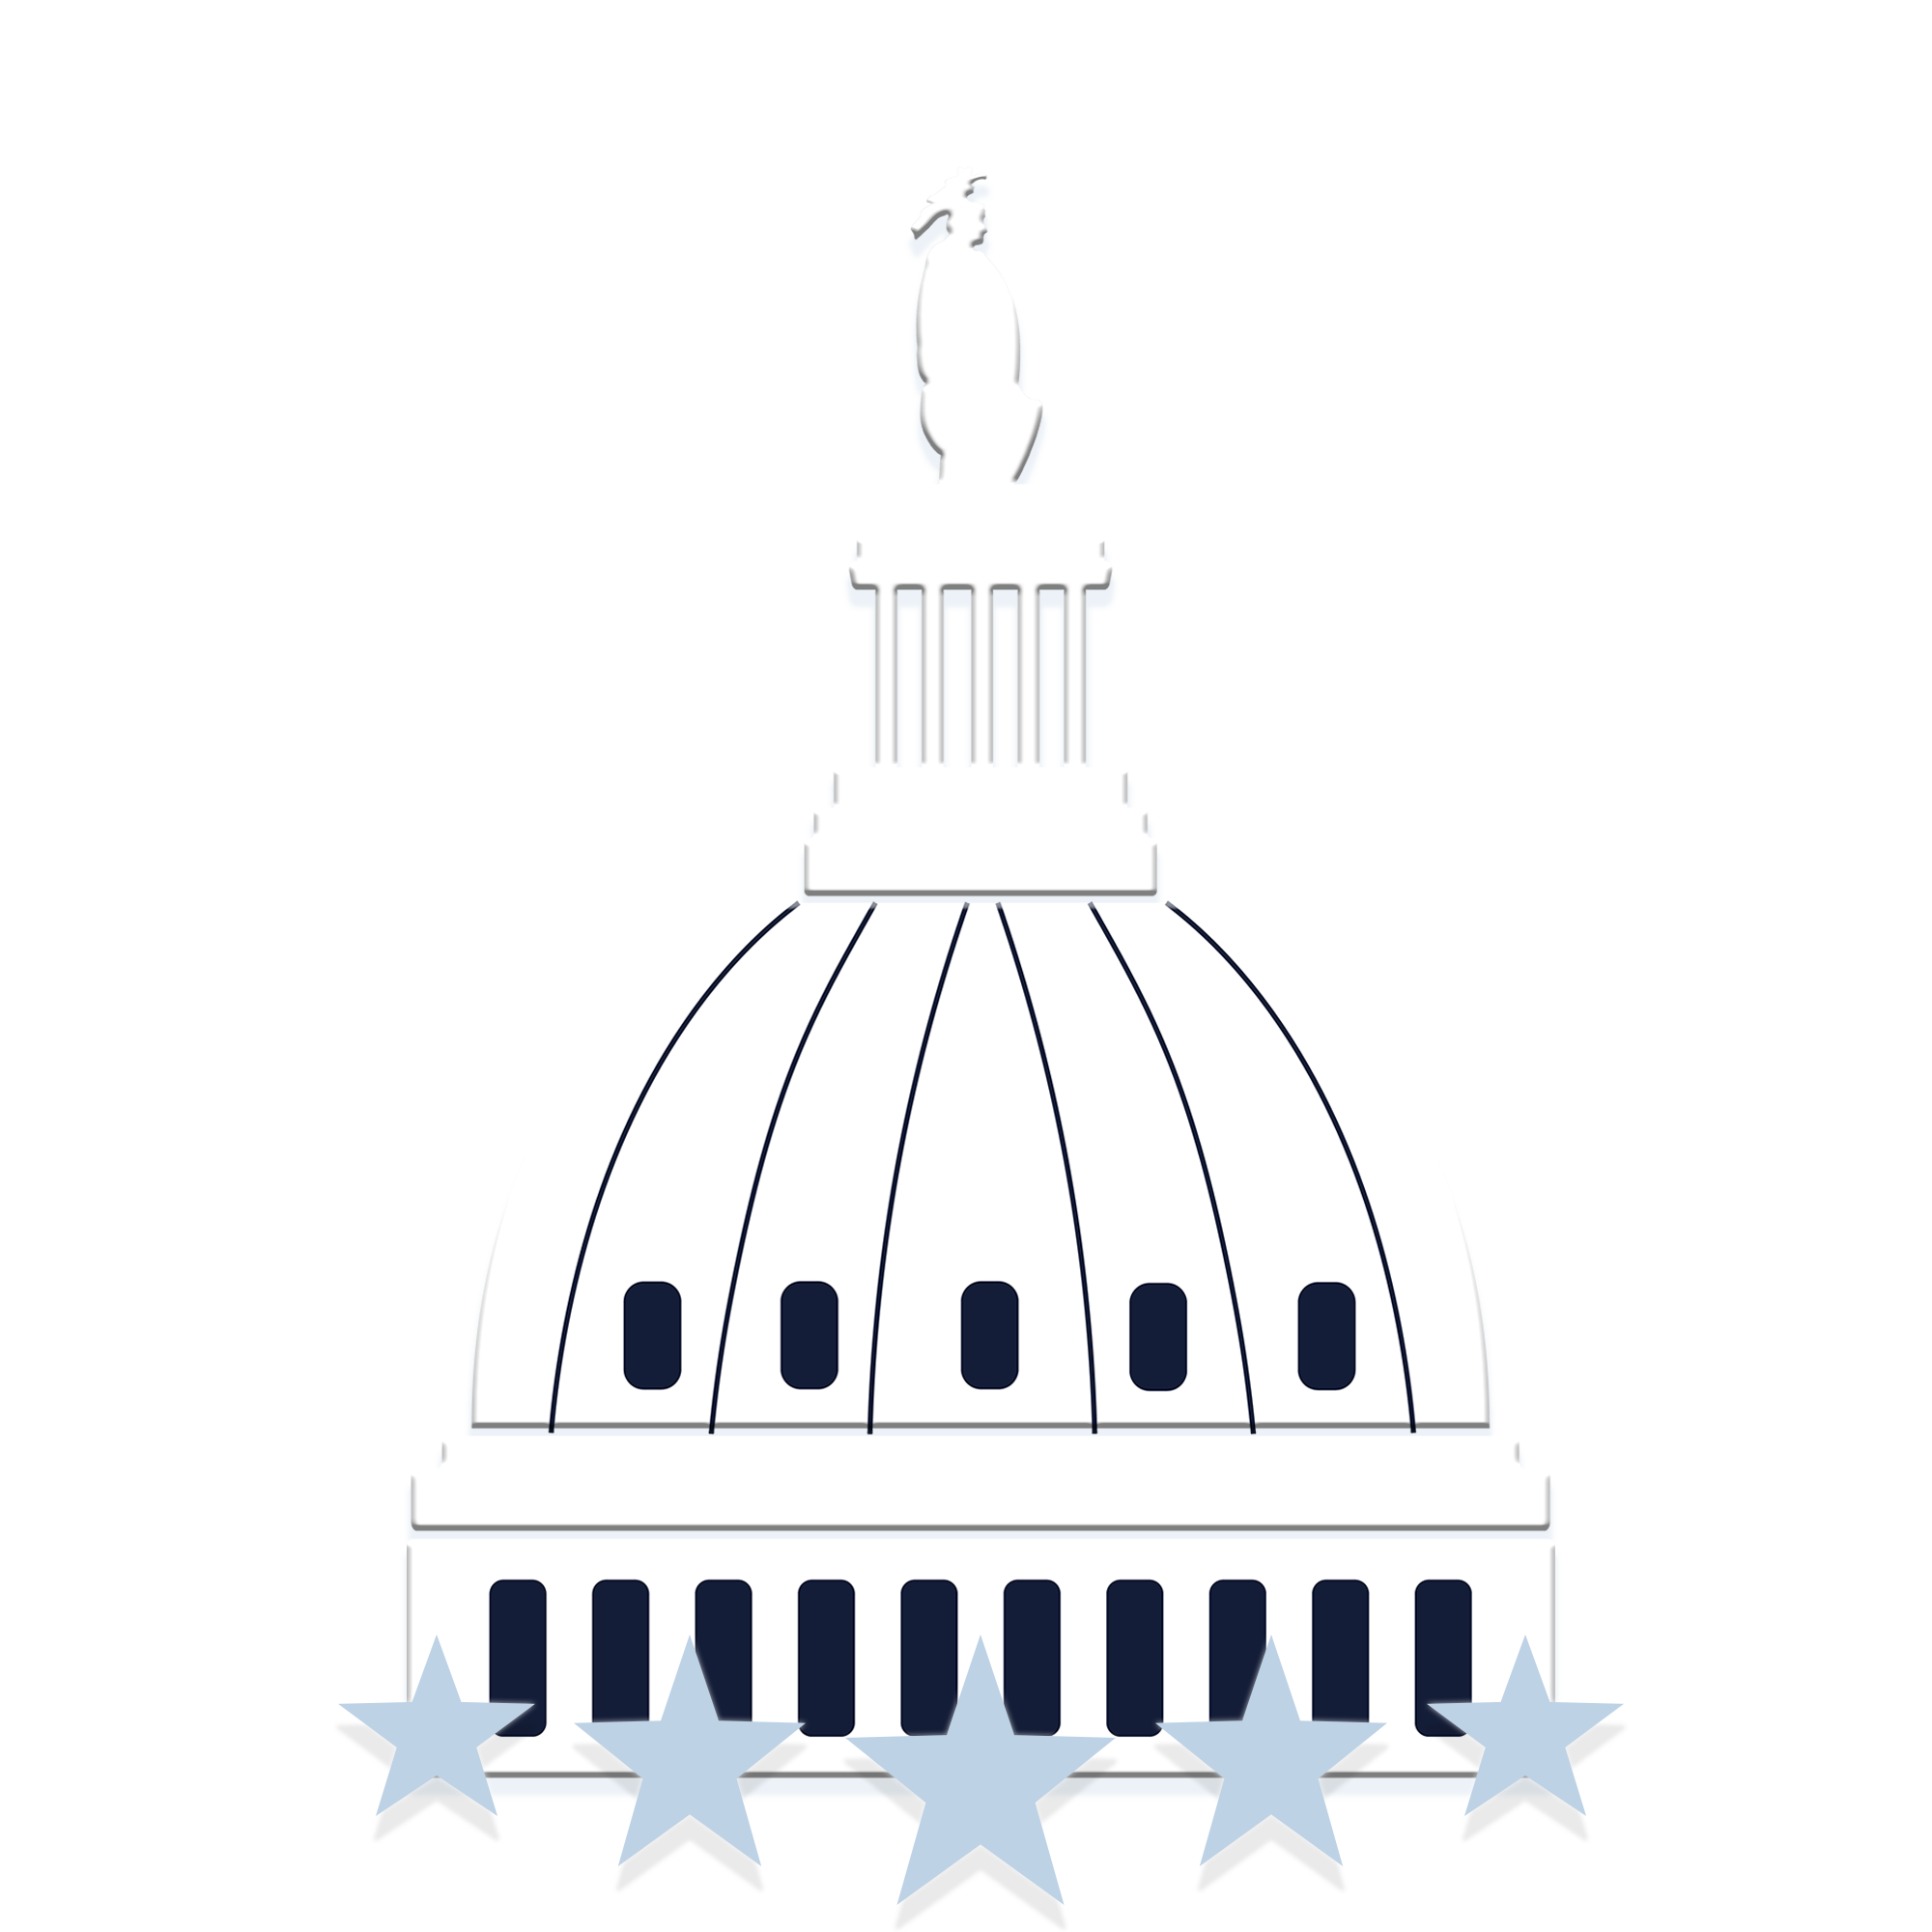 Capitol Building Logo